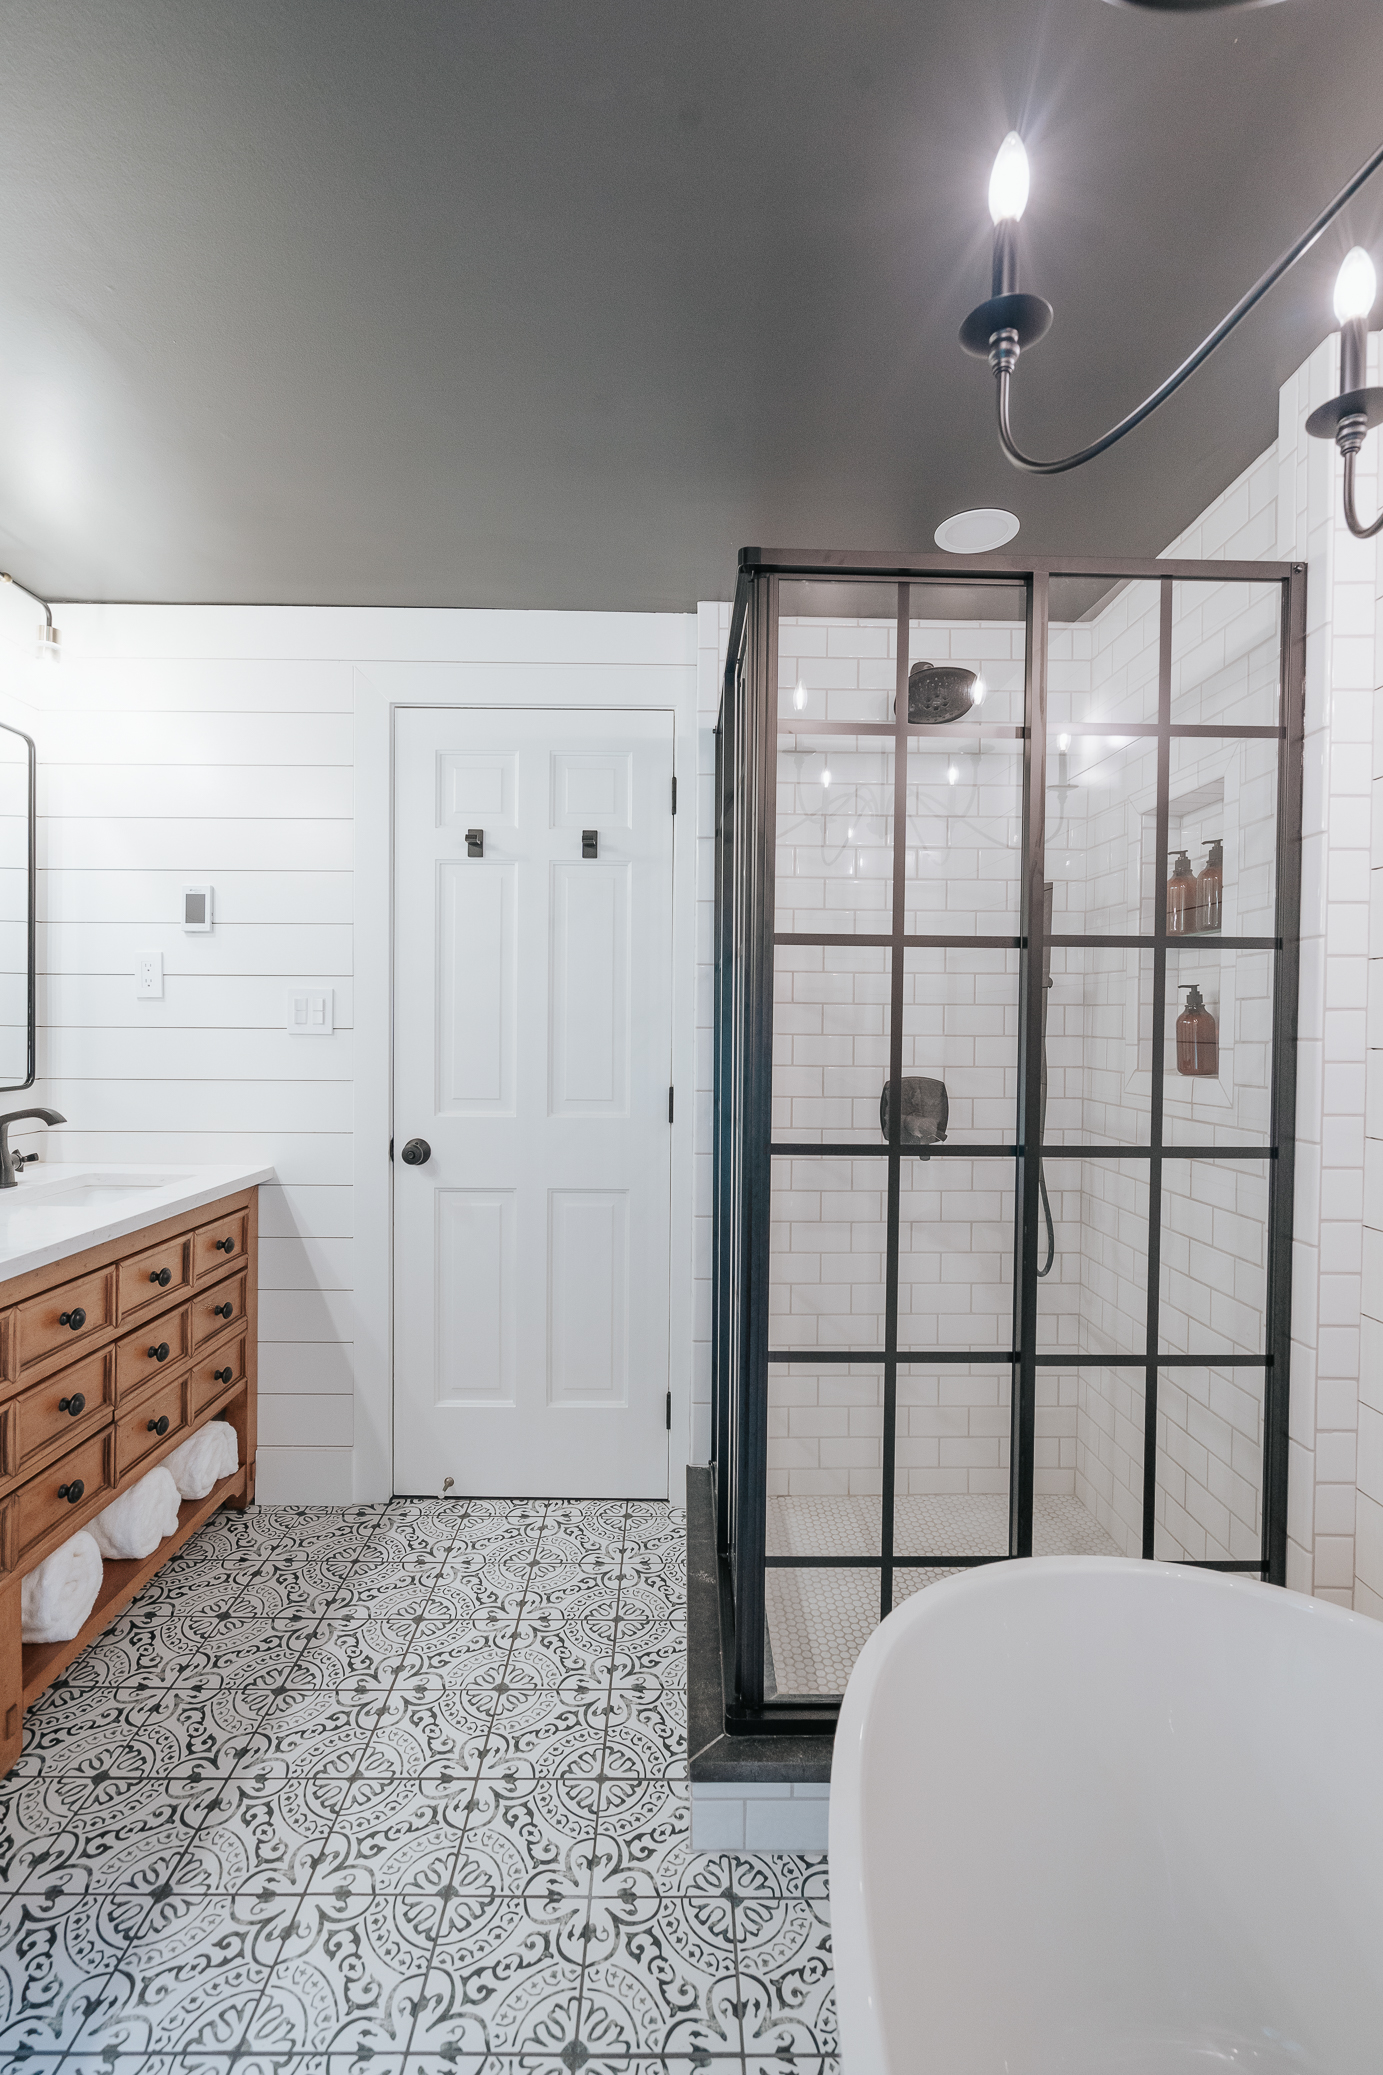 43 Small Bathroom Ideas to Make Your Bathroom Feel Bigger